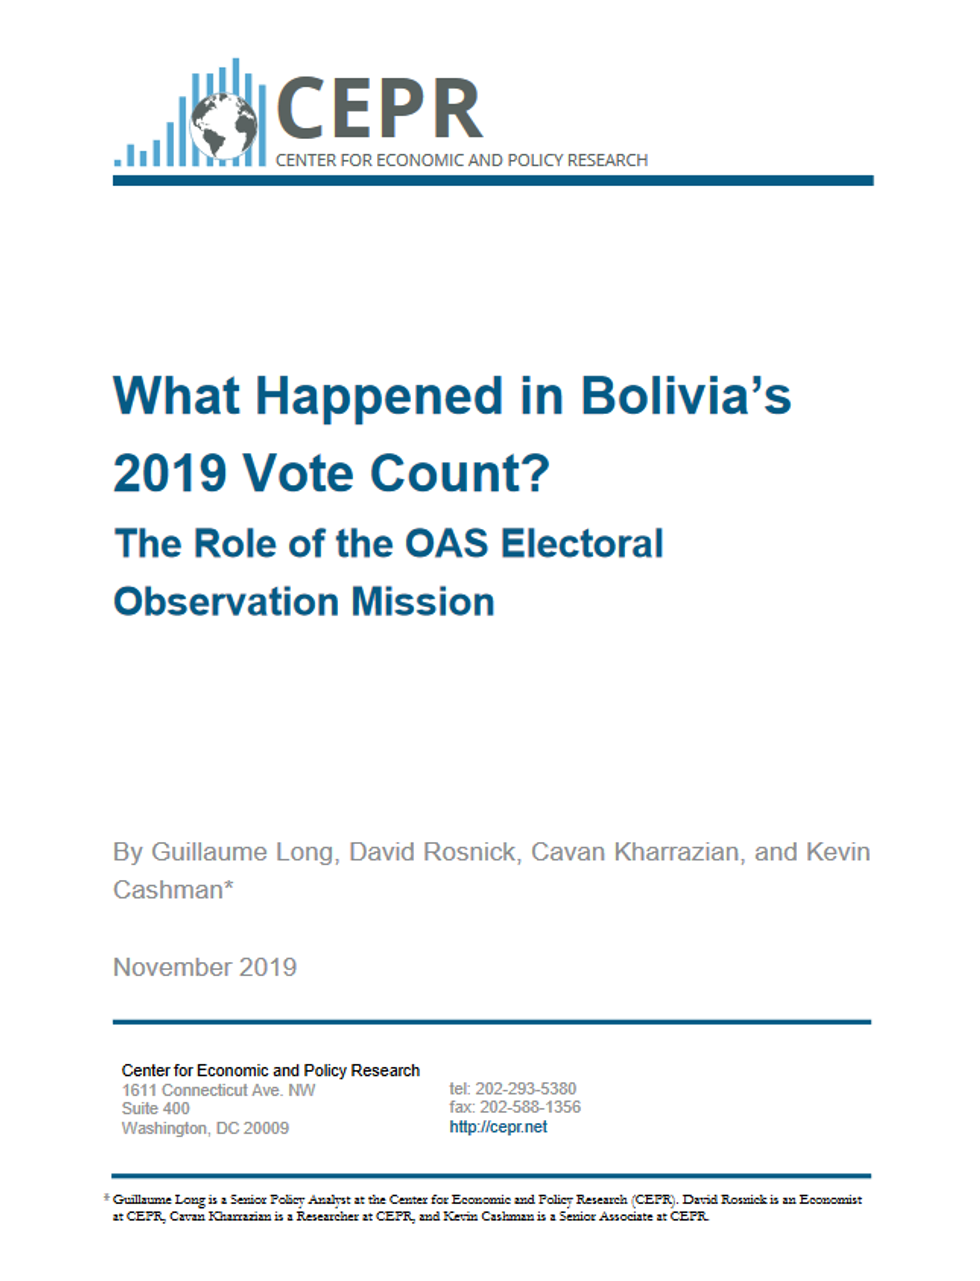 CEPR: What Happened in Bolivia's 2019 Vote Count?